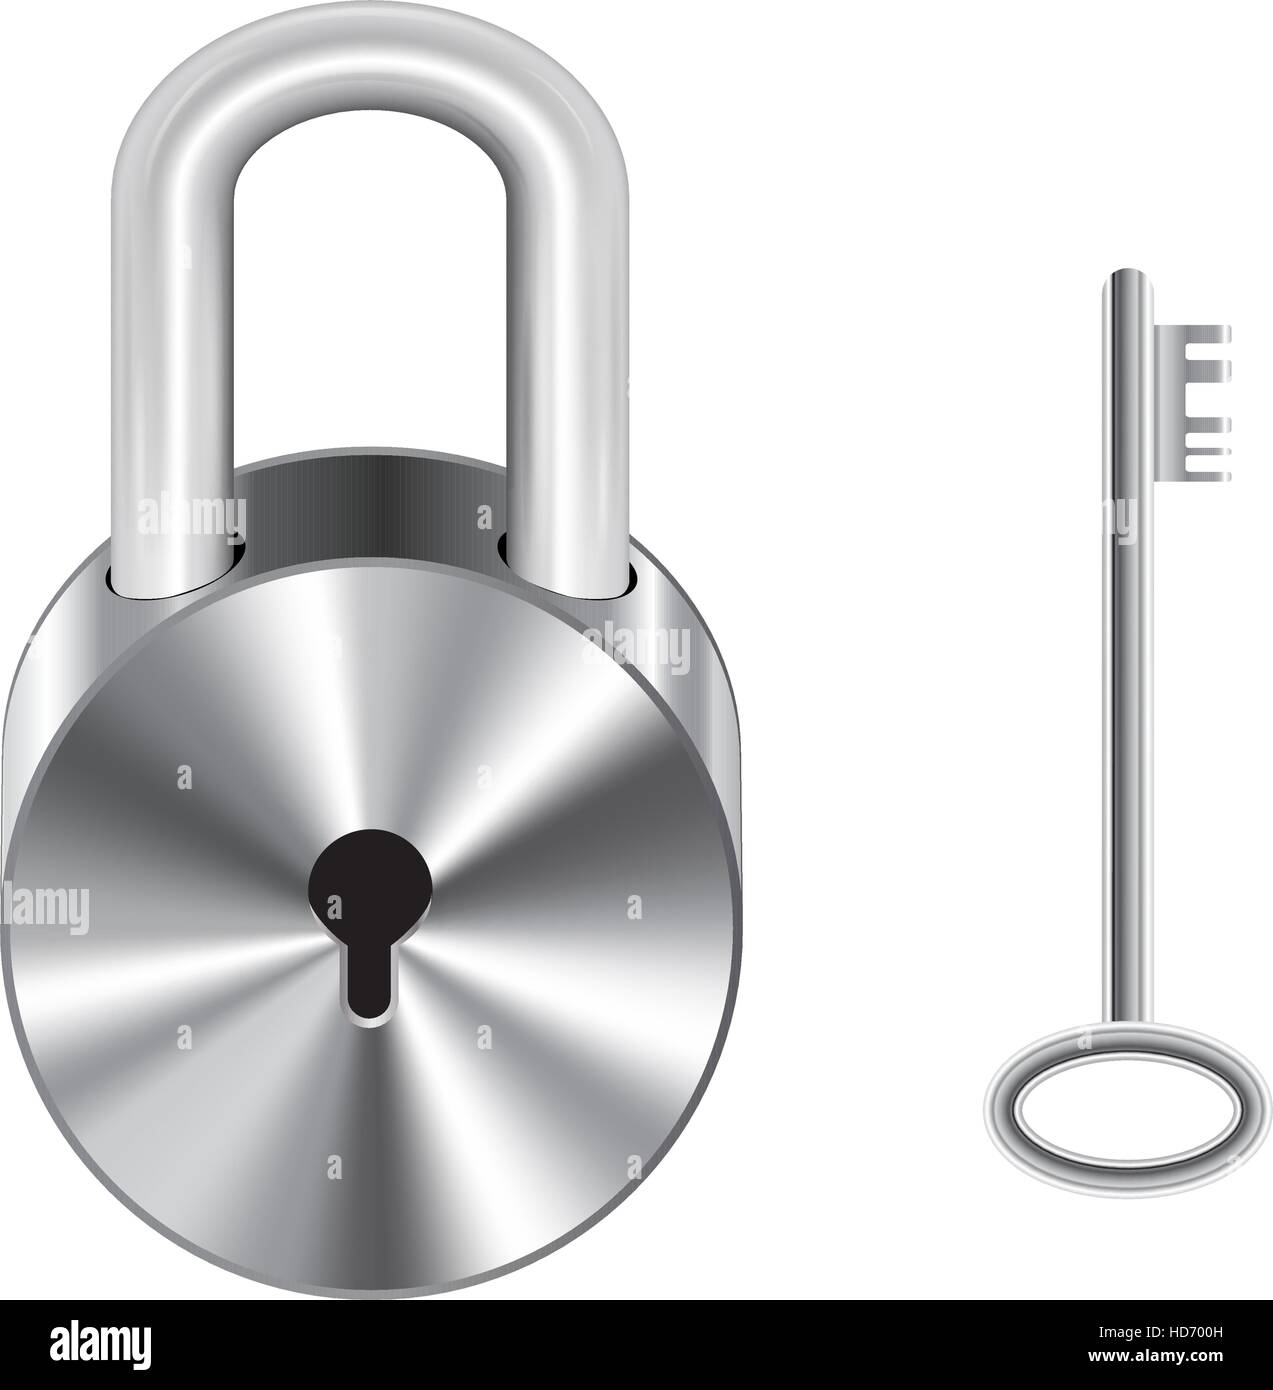 round shape steel master key lock and steel key Stock Vector